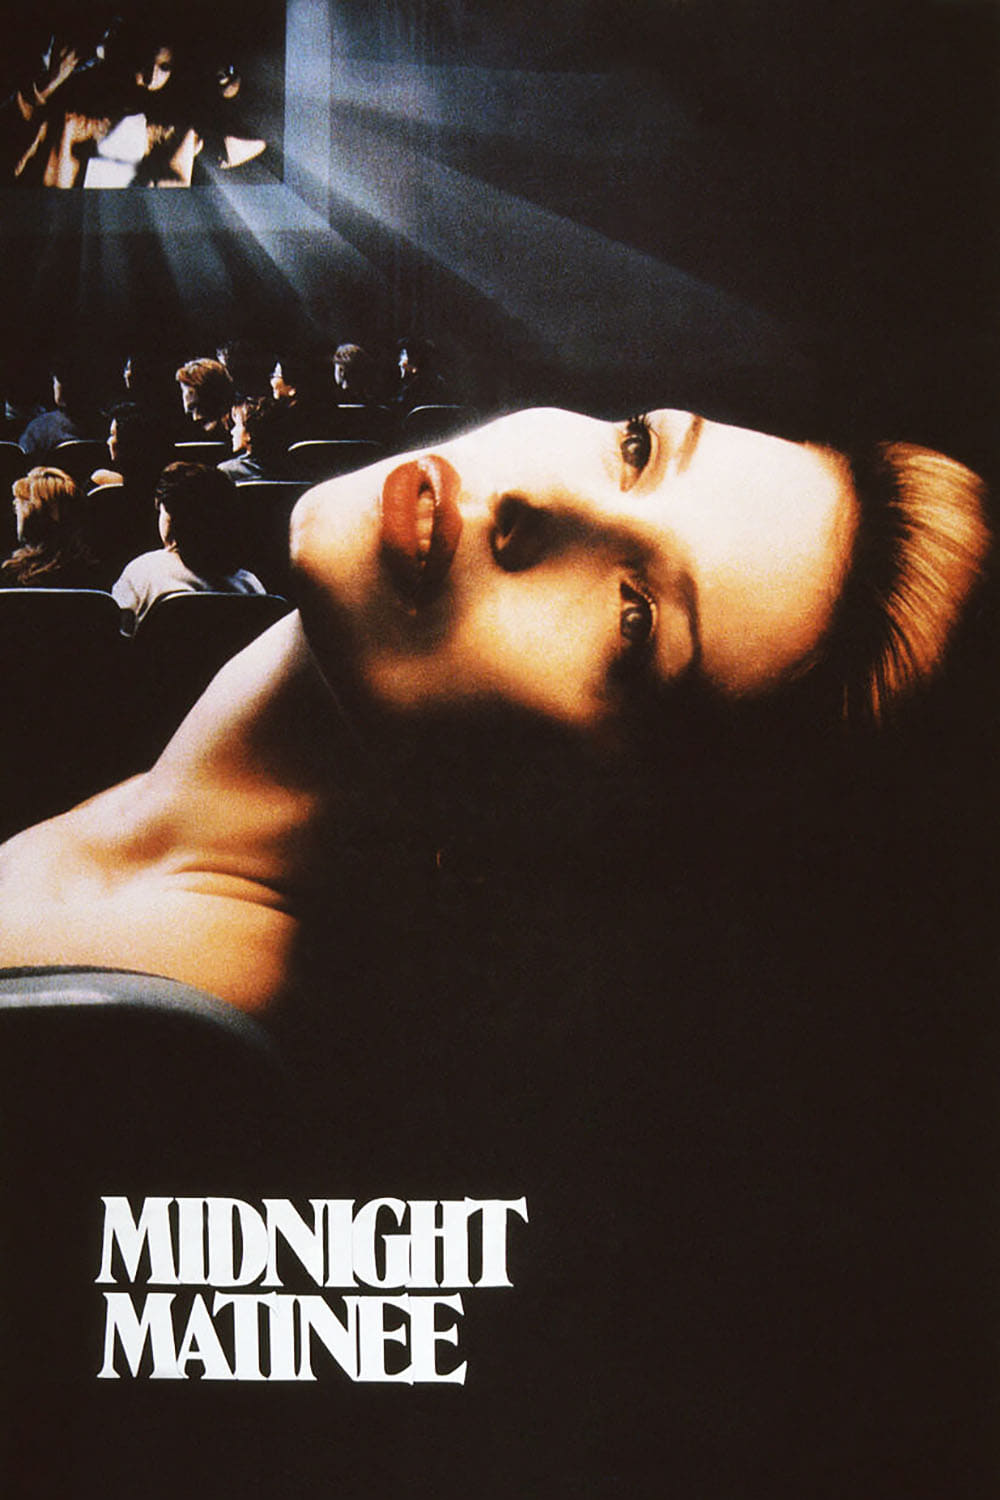 Midnight Matinee (1988)